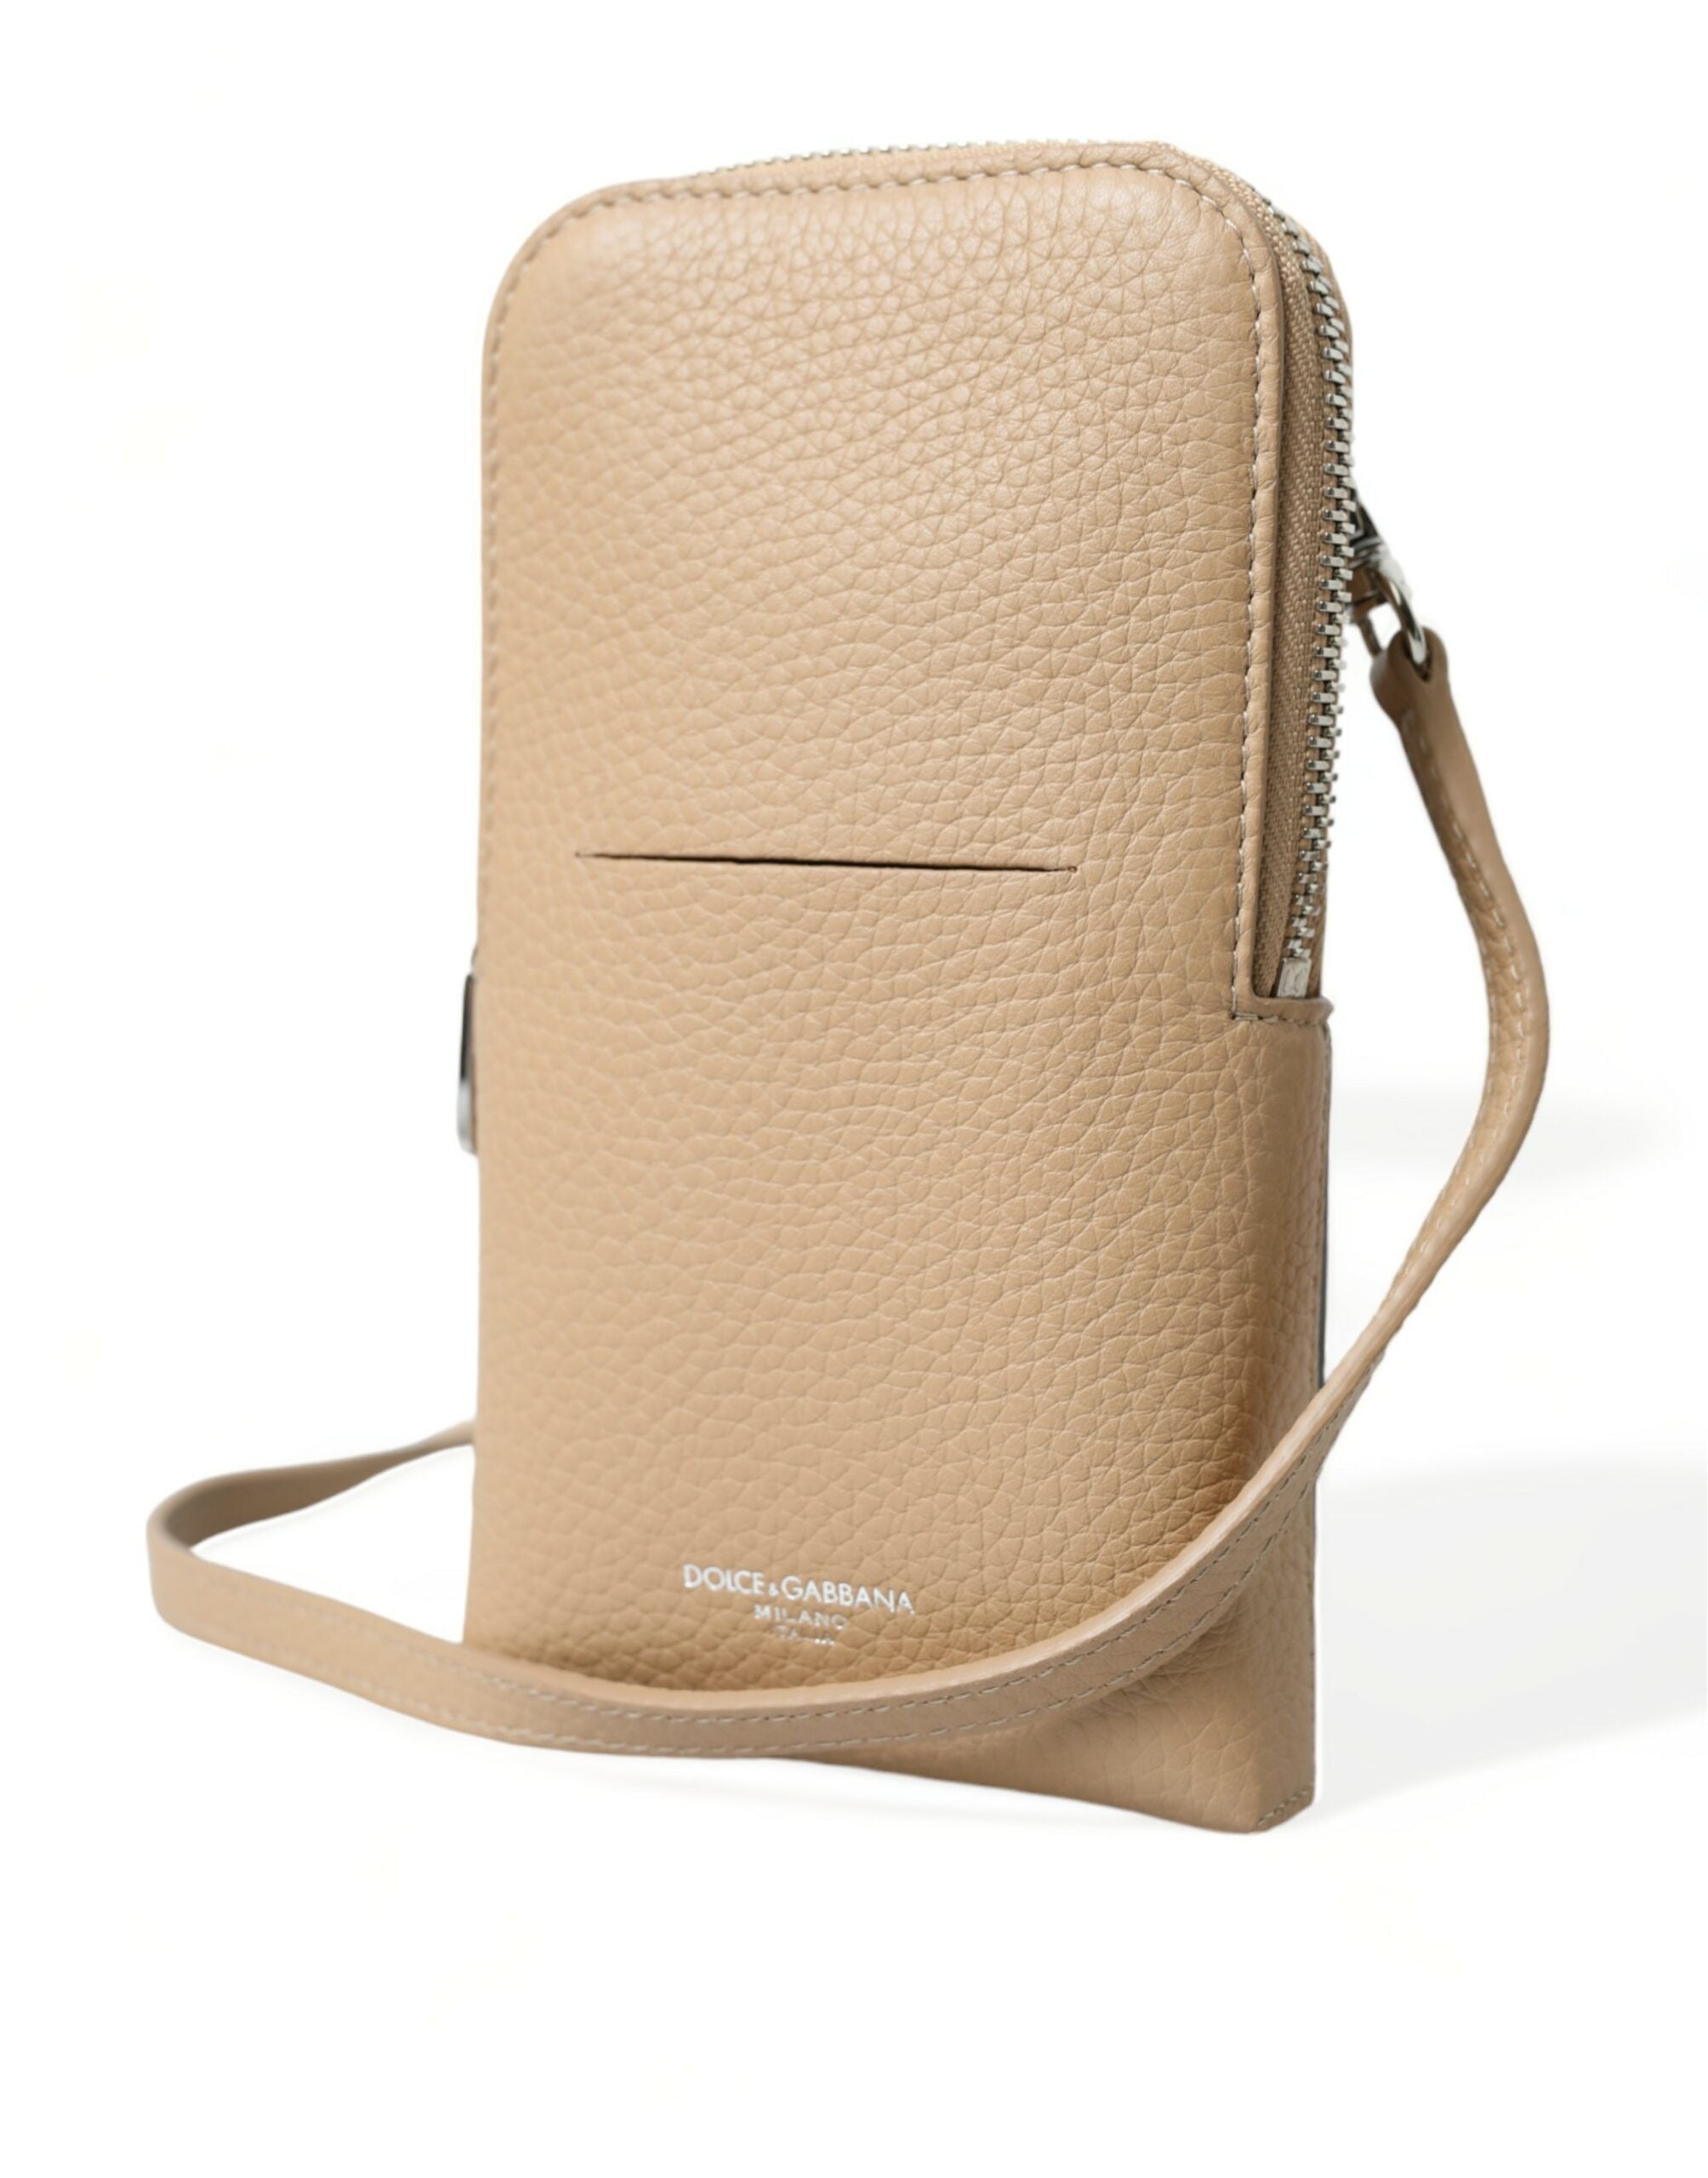 Dolce & Gabbana Chic Beige Leather Crossbody Phone Bag